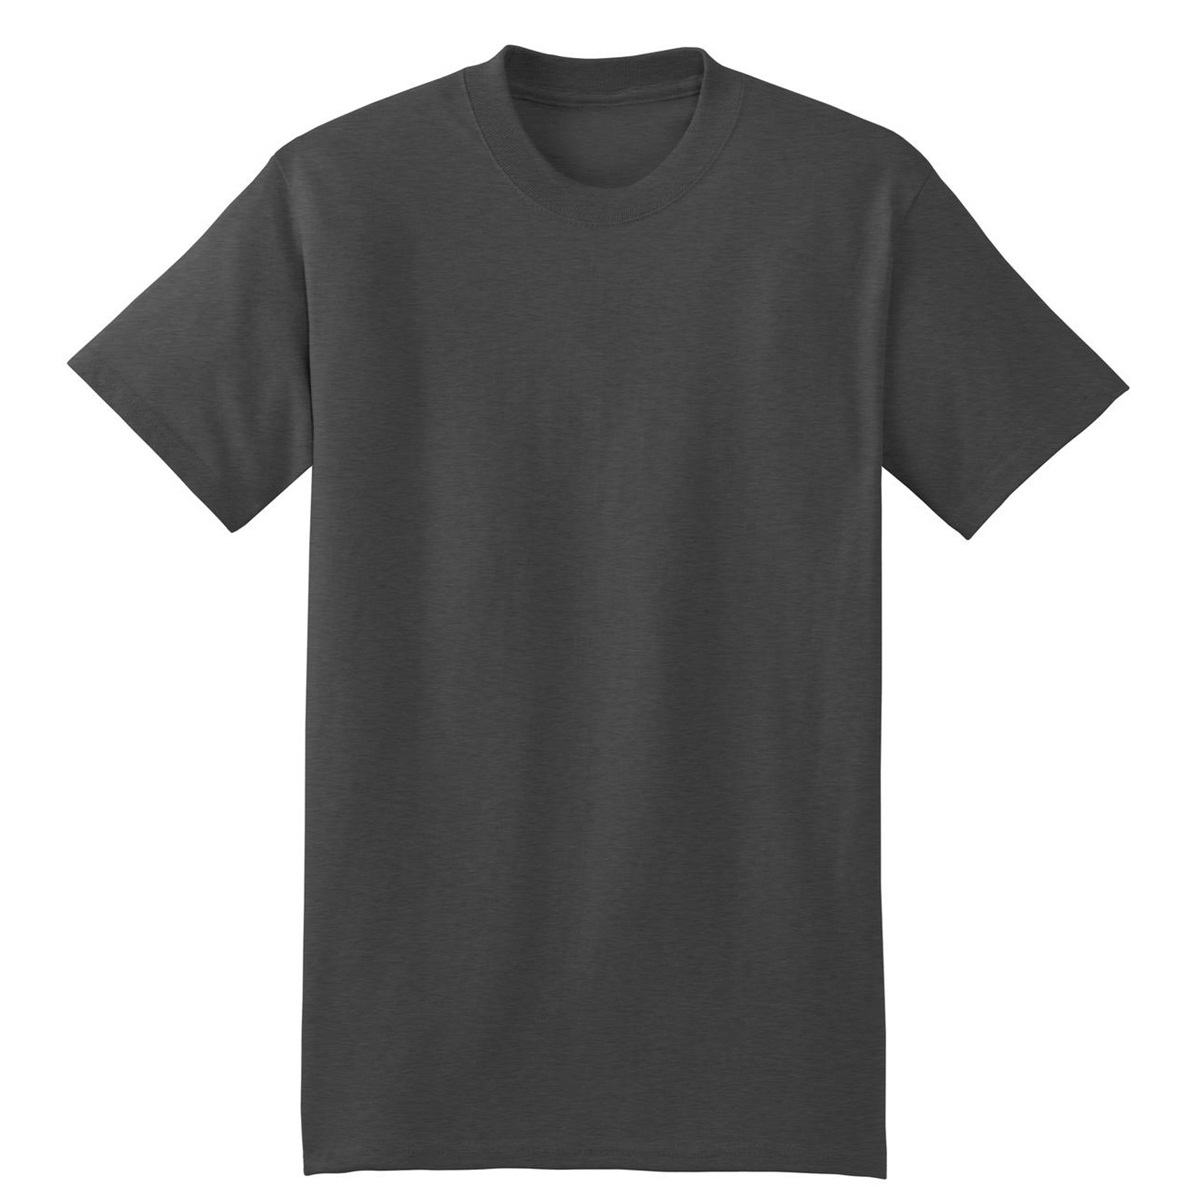 Hanes 5180 Beefy-T Cotton T-Shirt - Charcoal Heather | FullSource.com